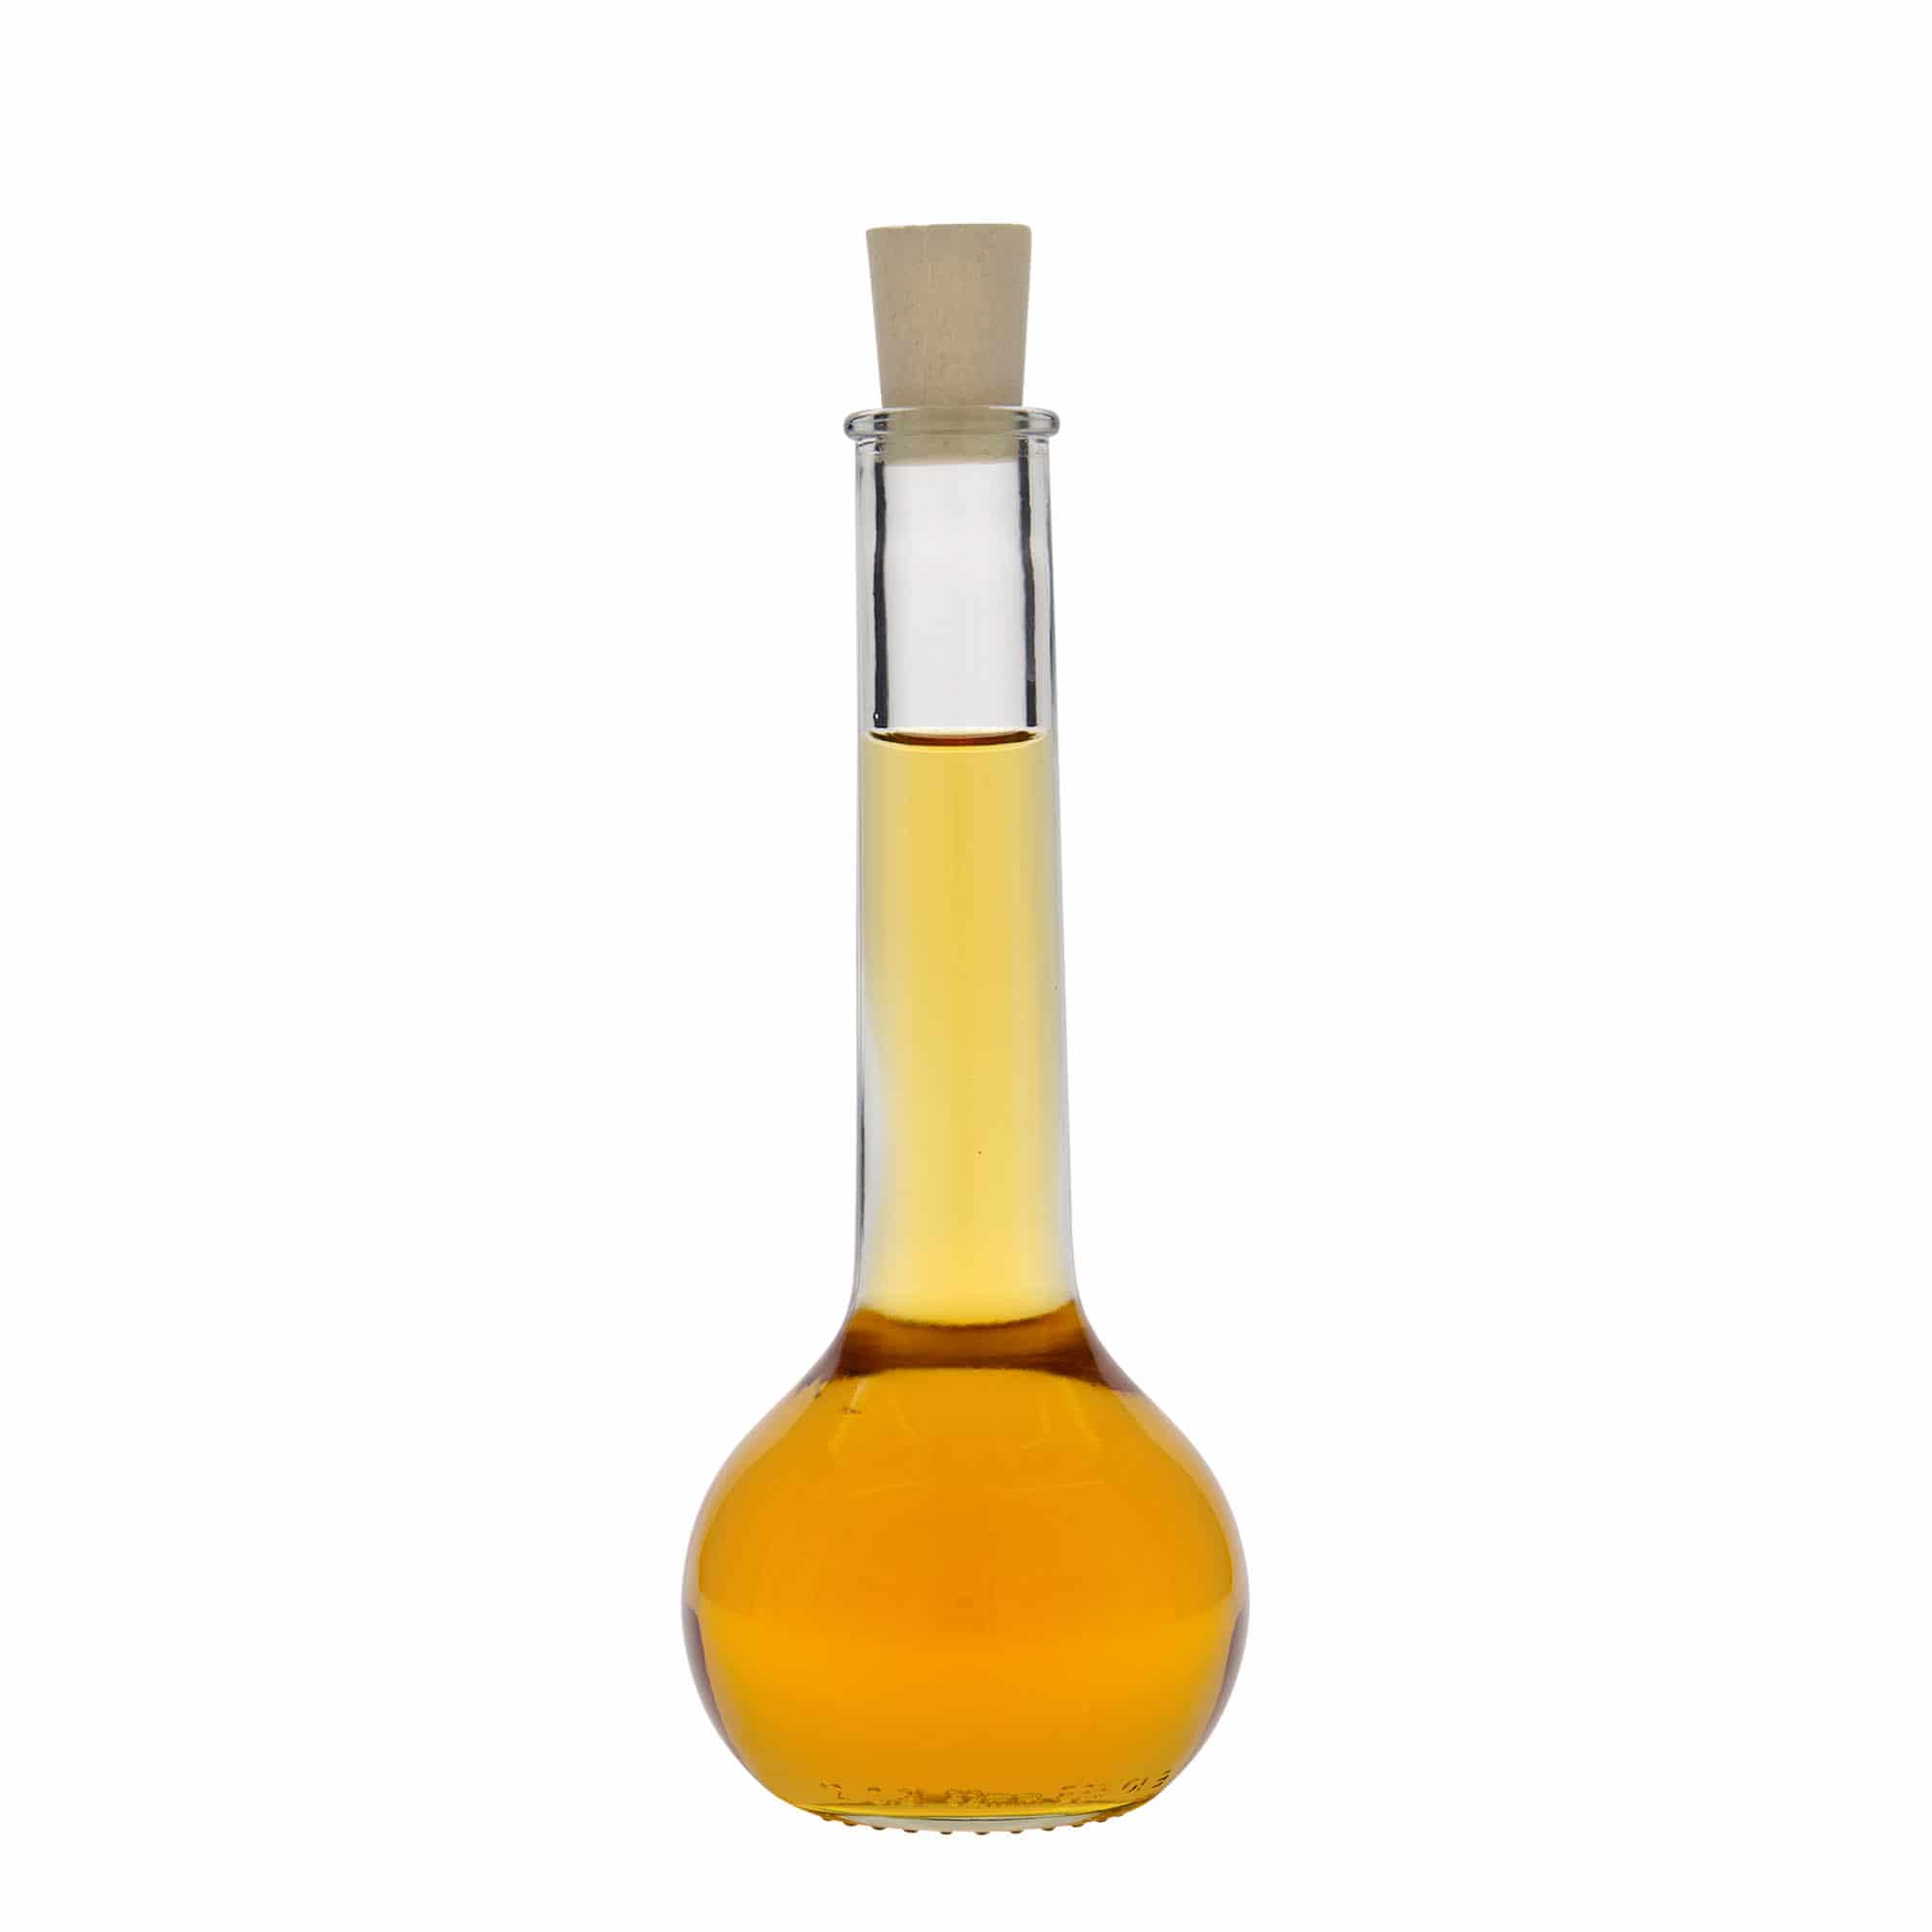 200 ml glass bottle 'Tulipano', closure: cork